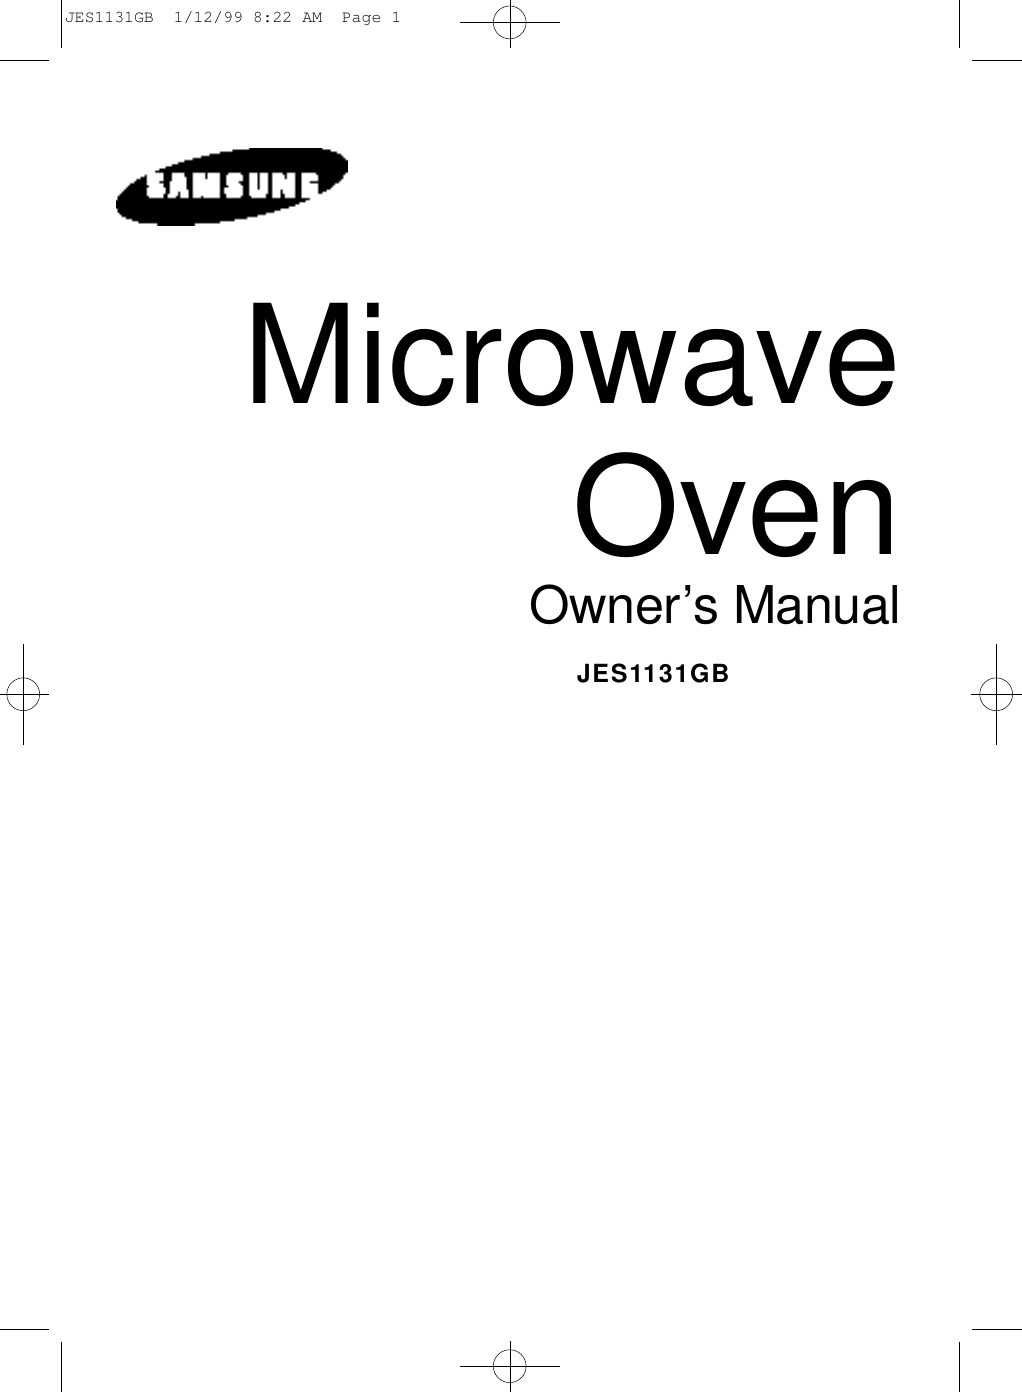 Microwave OvenO w n e r’s ManualJ E S 11 3 1 G BJES1131GB  1/12/99 8:22 AM  Page 1